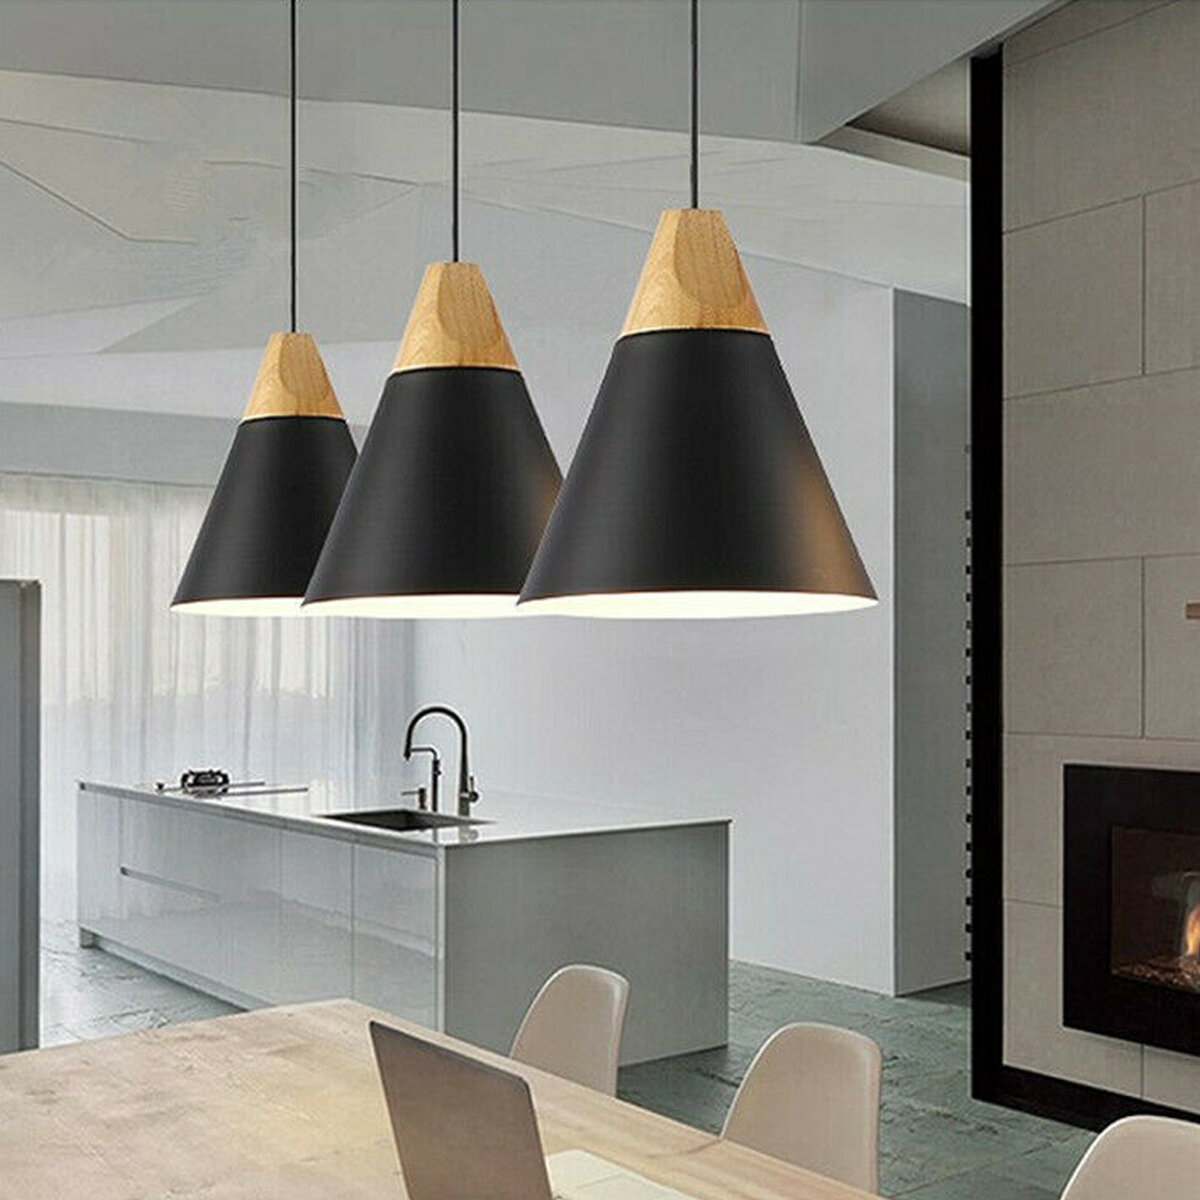 Modern Pendant Lighting Nordic, Kitchen Hanging Lights Over Table